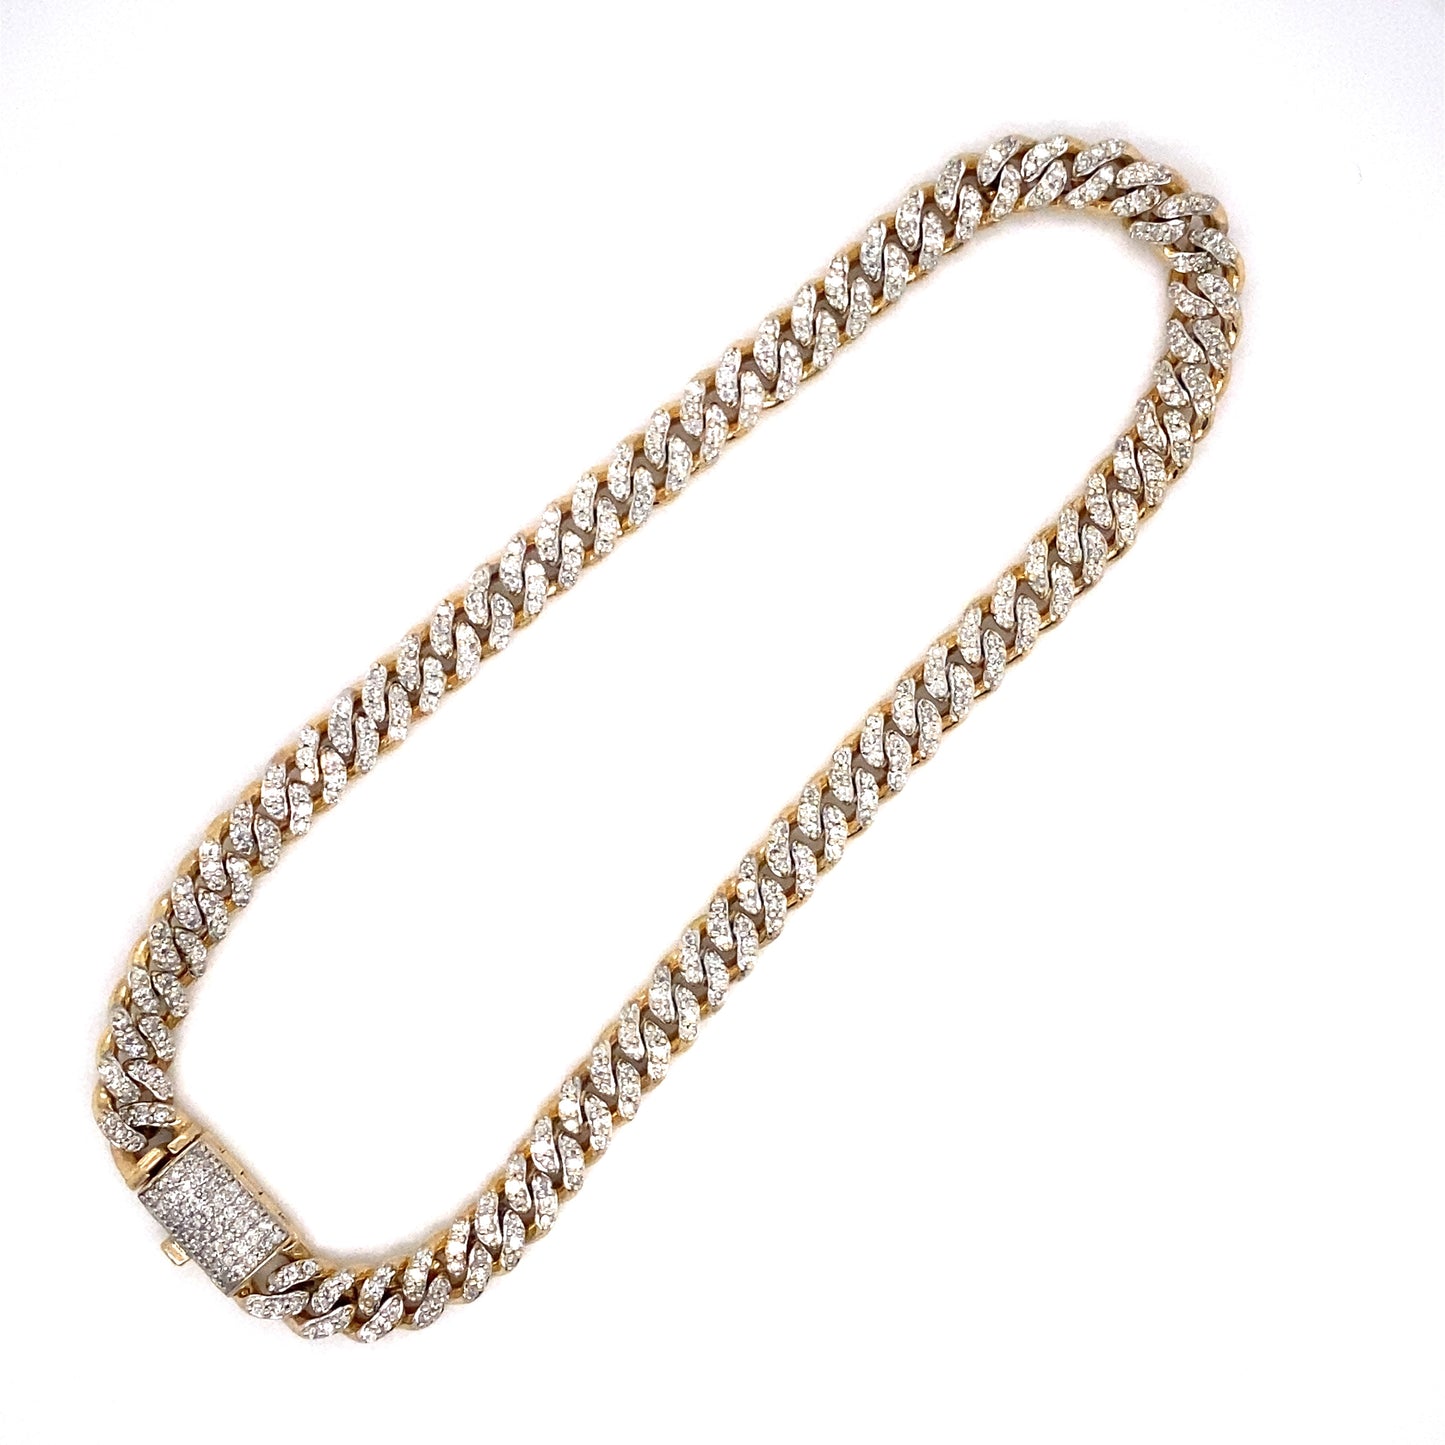 Circa 1980s 2.36 Carat Diamond Curb Link Chain Bracelet in 10K Gold